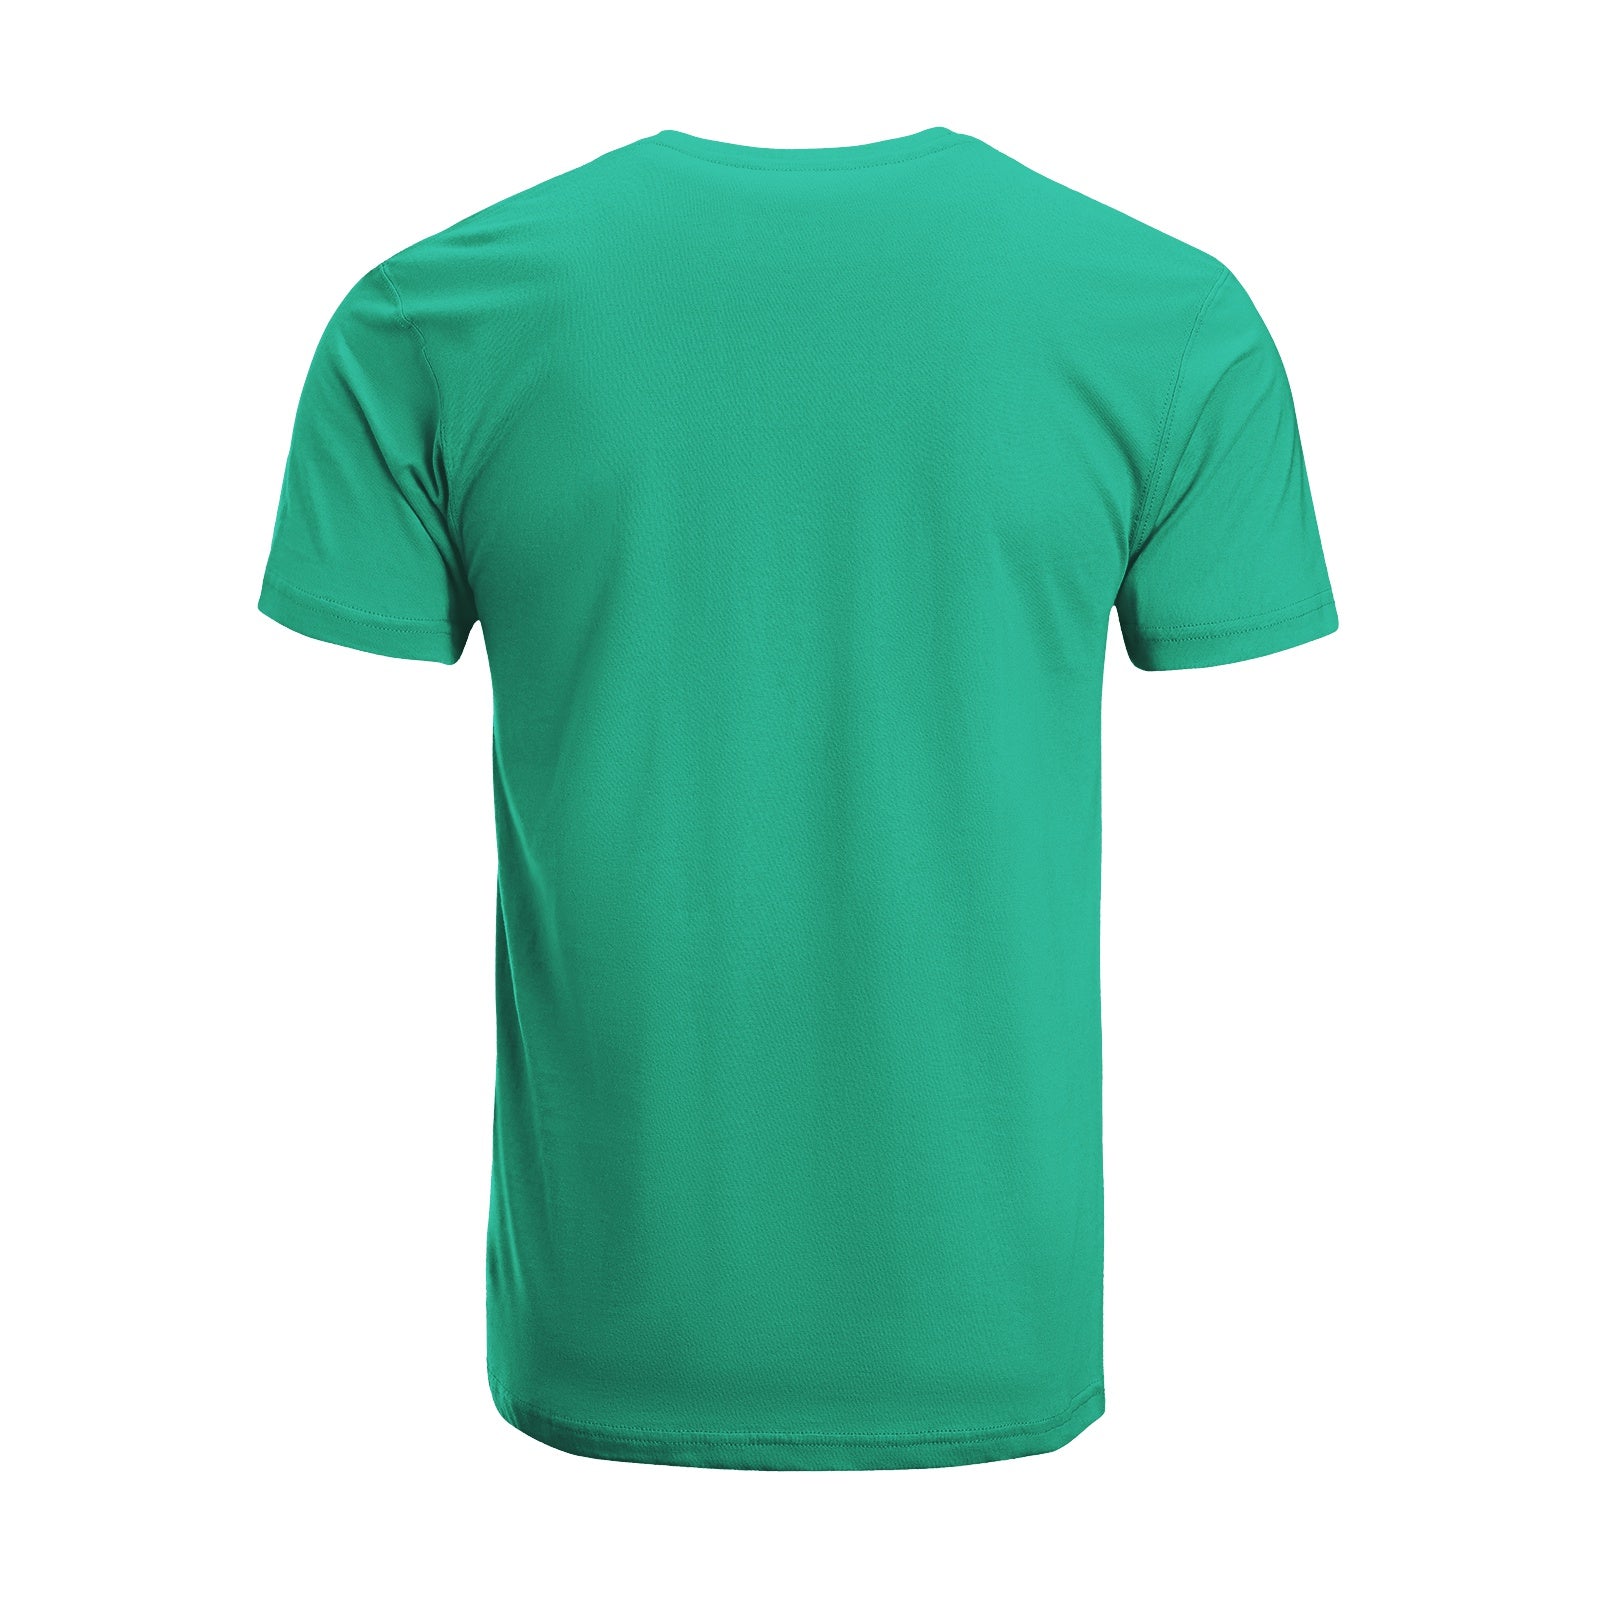 Unisex Short Sleeve Crew Neck Cotton Jersey T-Shirt CAT 18 - Tara-Outfits.com